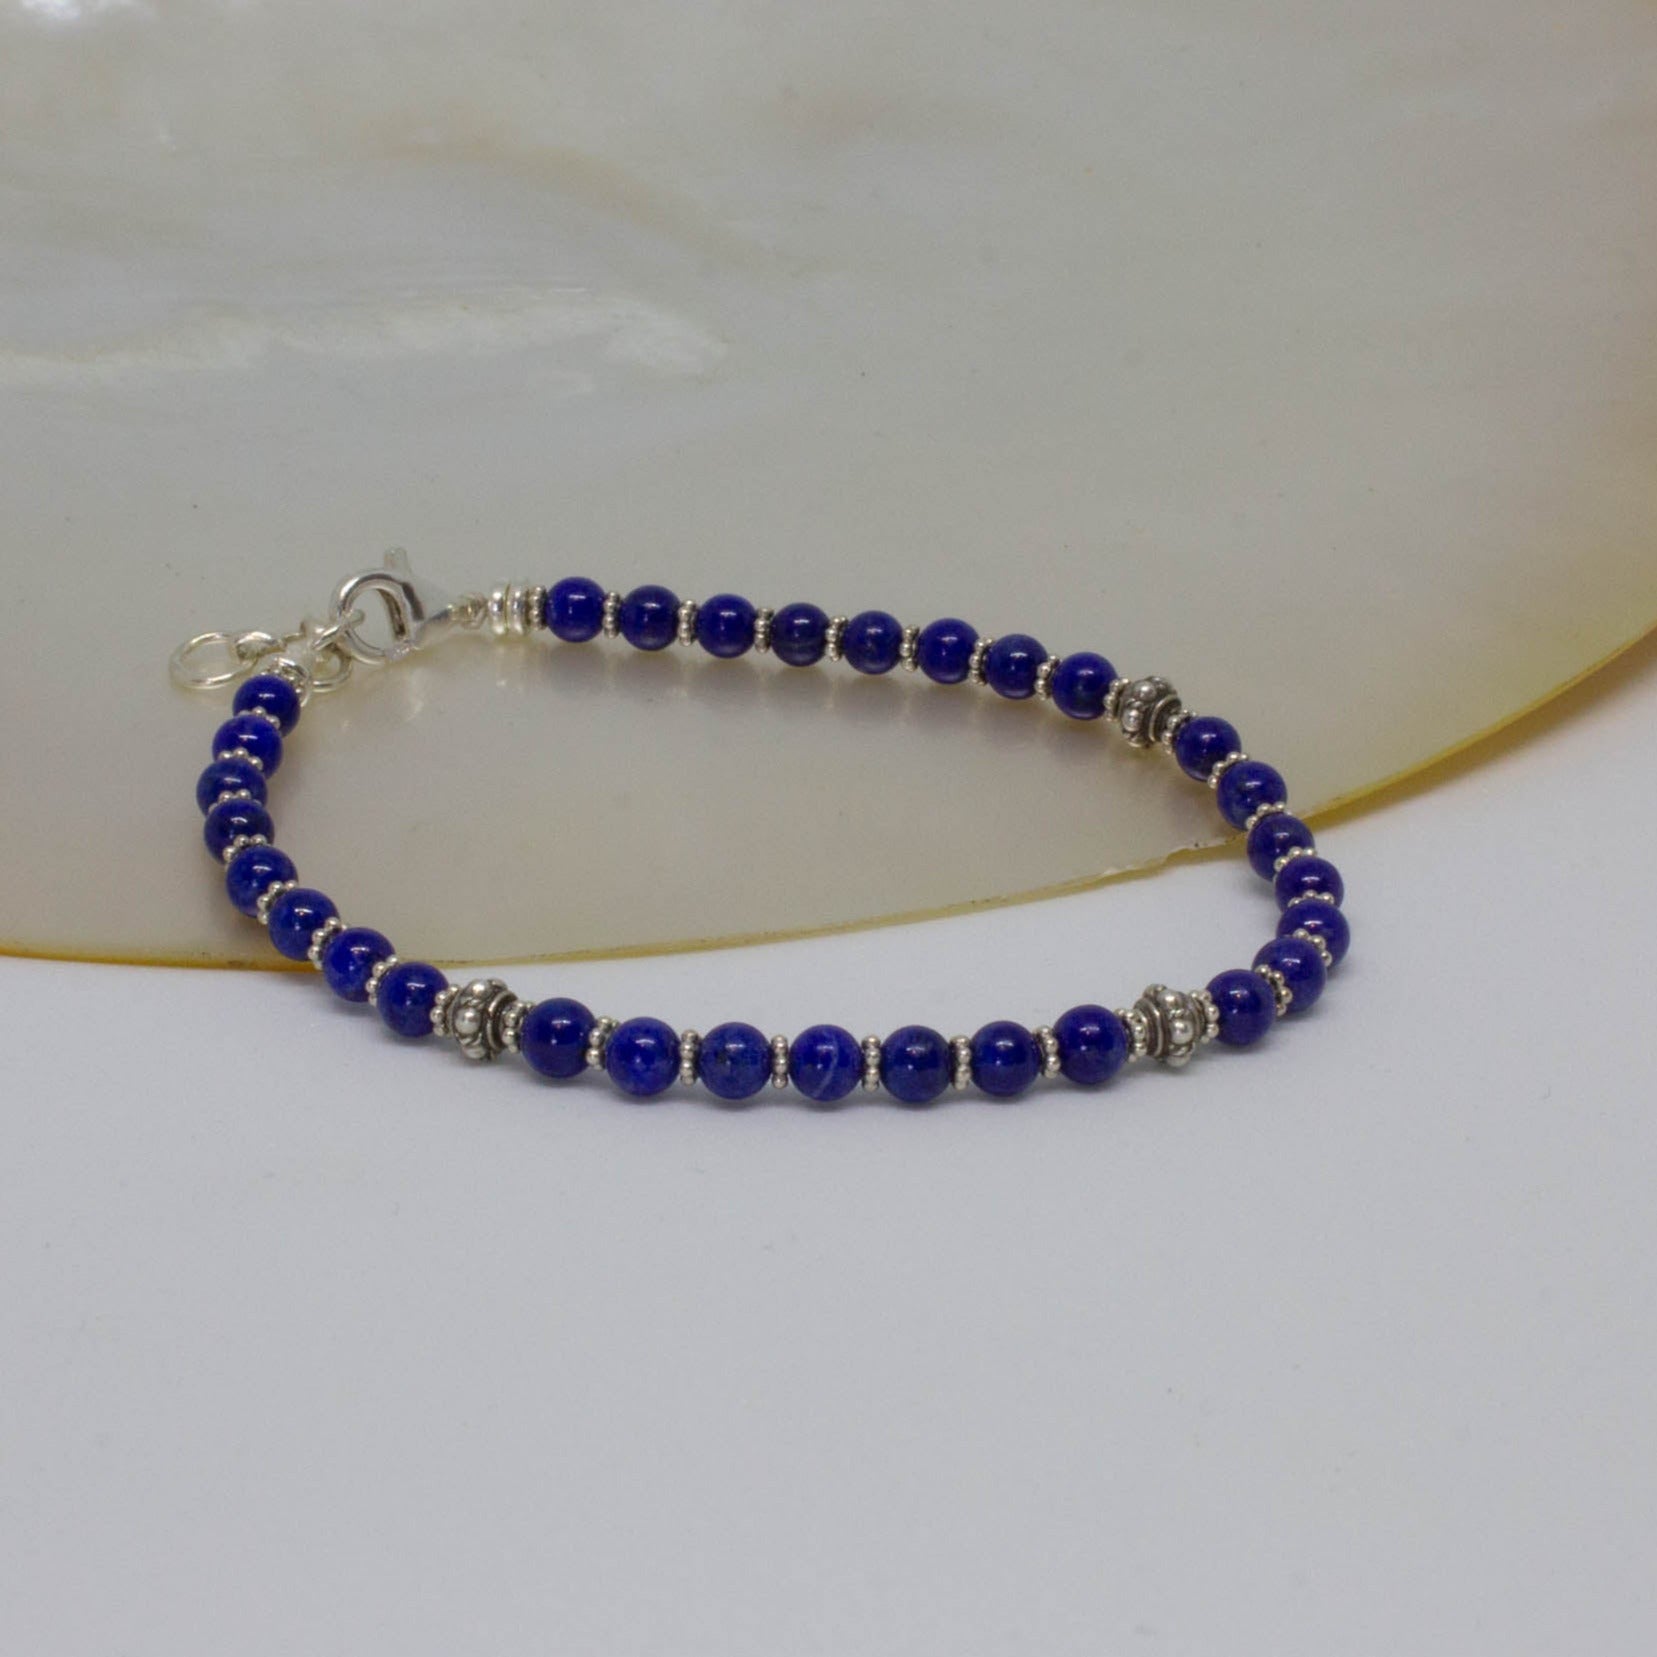 Lapis Lazuli and Silver Bracelet - Beyond Biasa